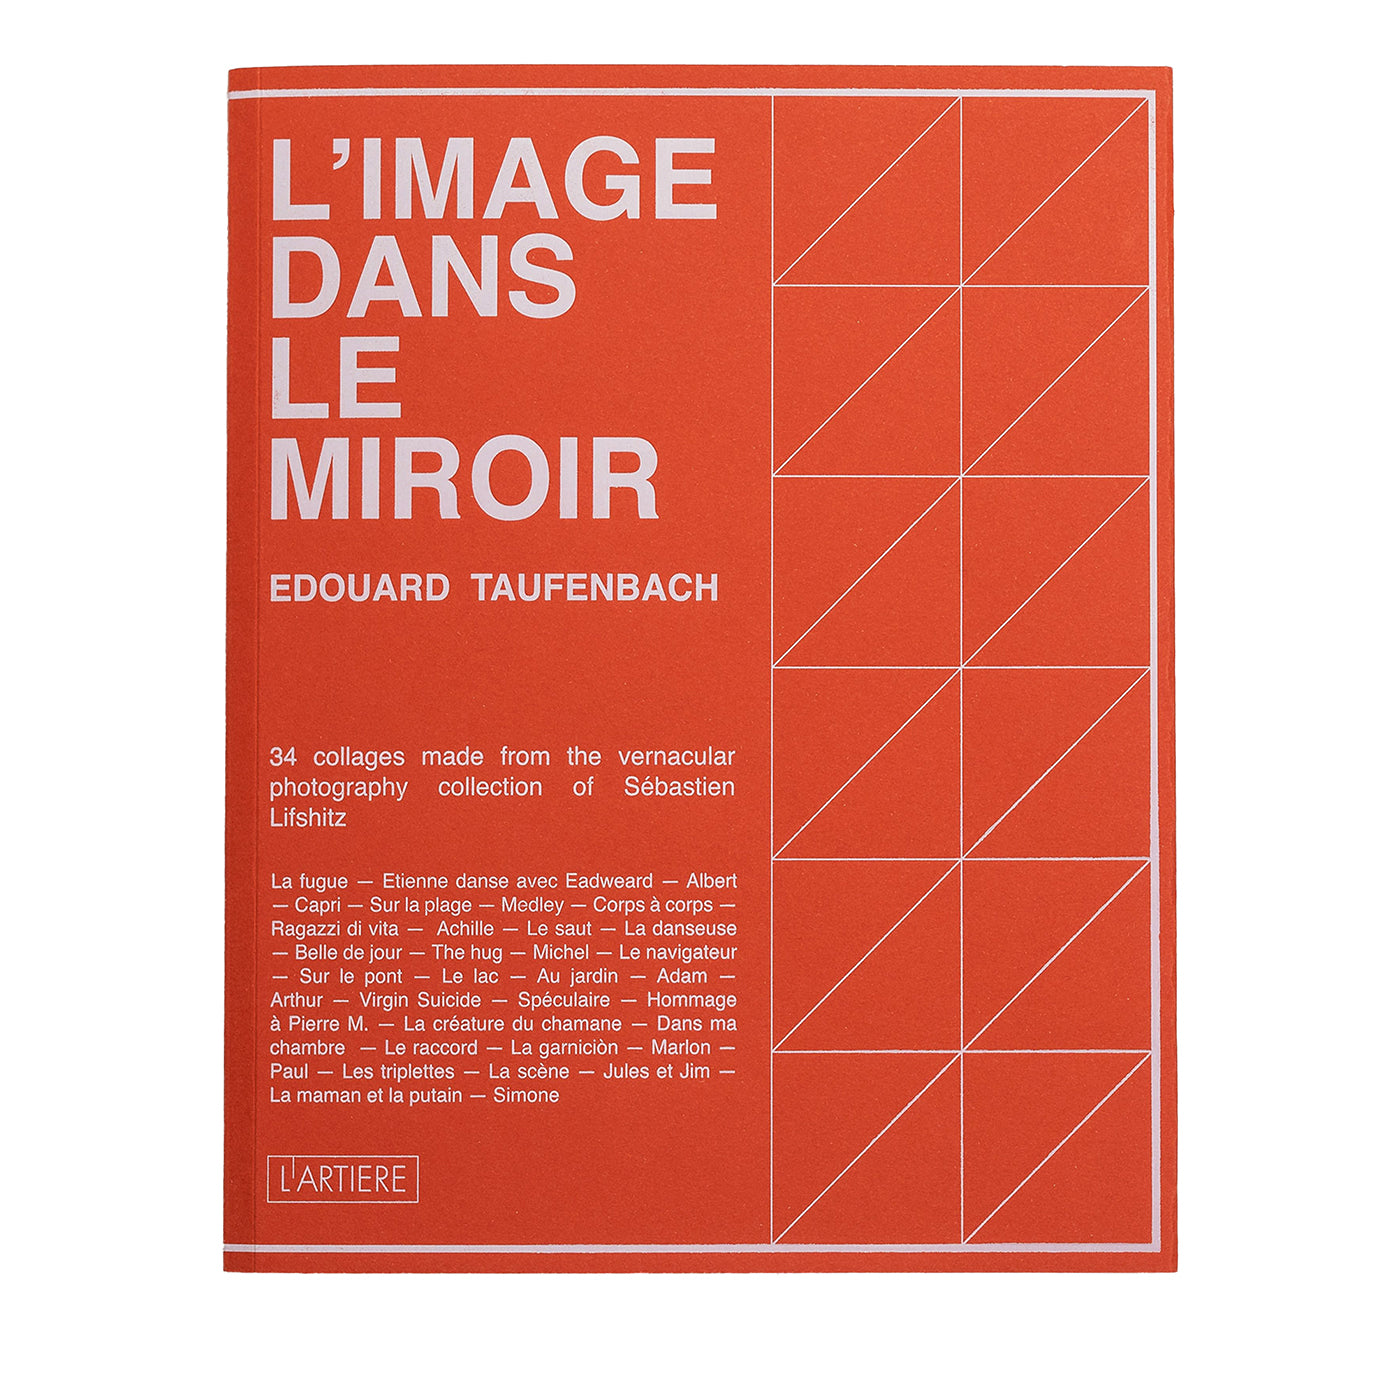 L’image dans le miroir - Edouard Taufenbach - Limited Edition of 25 copies - Main view